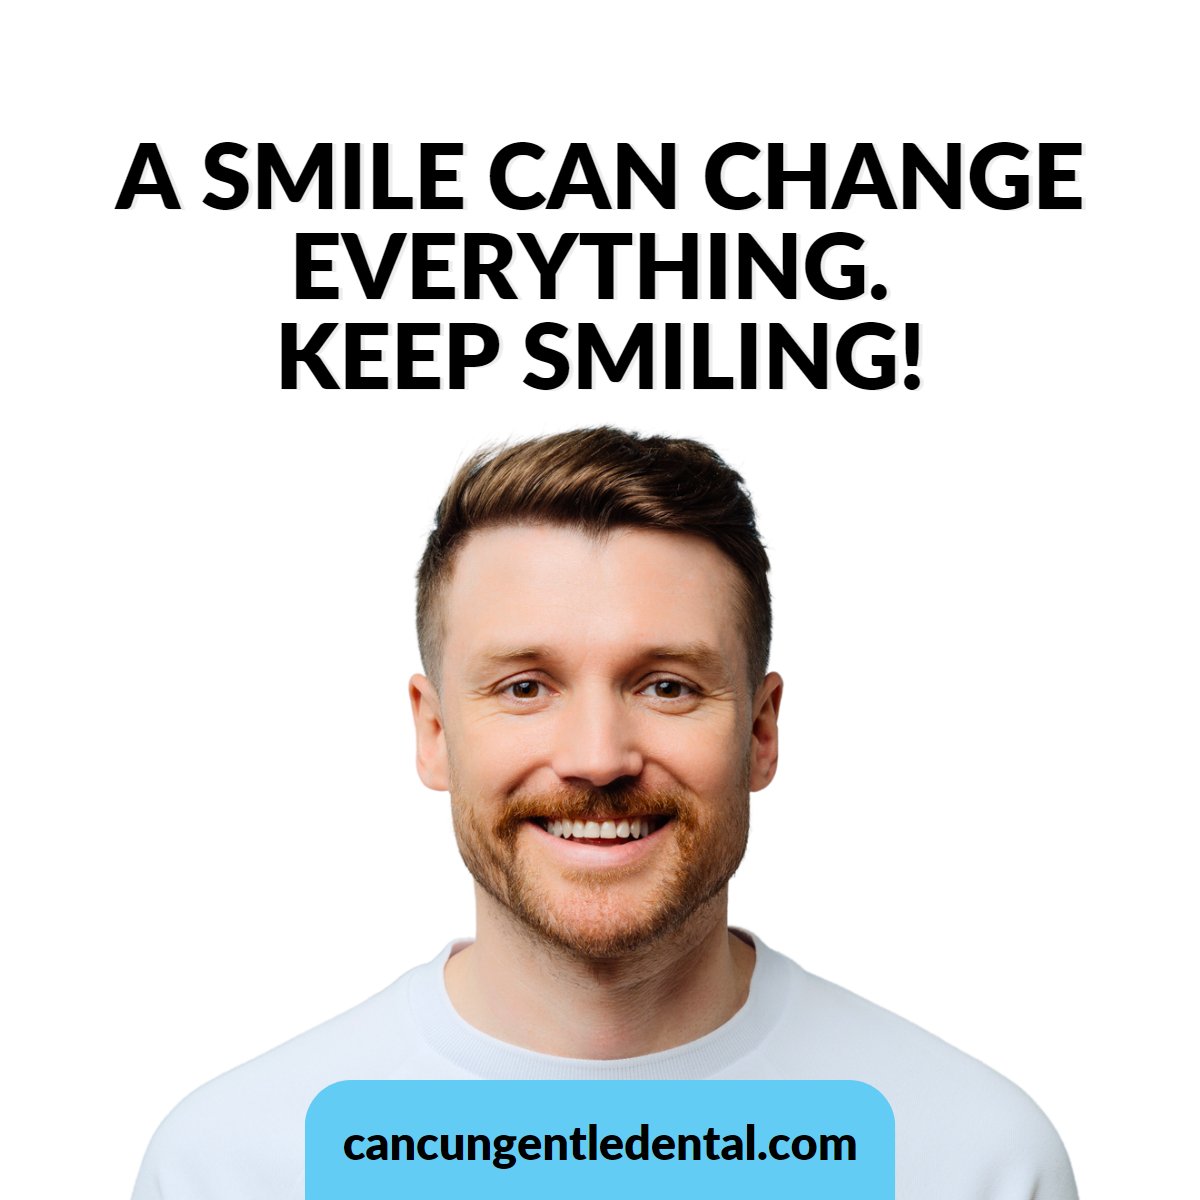 Smile! The dental care you need! Book an appointment now!🦷

#dentistinmexico #dentalcare #emergencydentist #dentalimplantscancun #dentalvacations #dentaltourism #walkindentist #lowcostdentist #cancundentalcare #urgentdentalcare